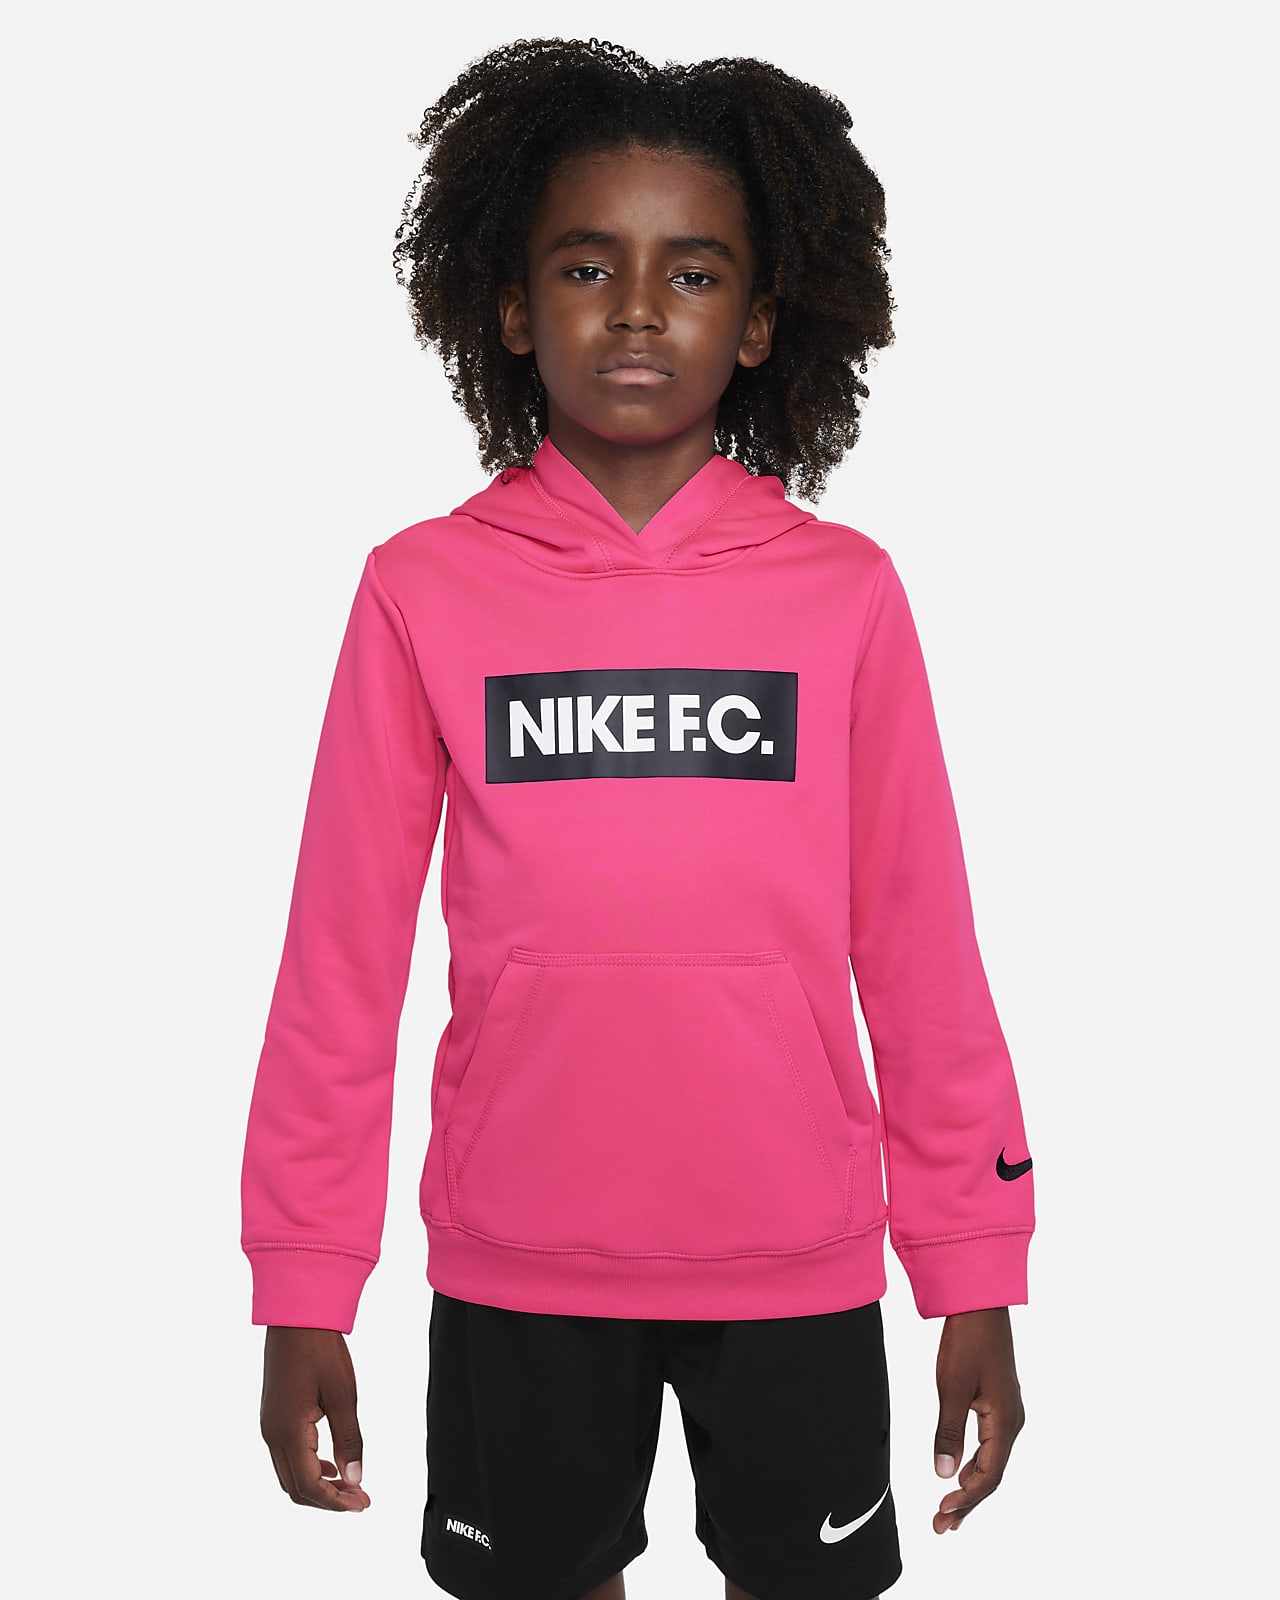 Expectativa Guiño desempleo Nike F.C. Sudadera con capucha de fútbol - Niño/a. Nike ES